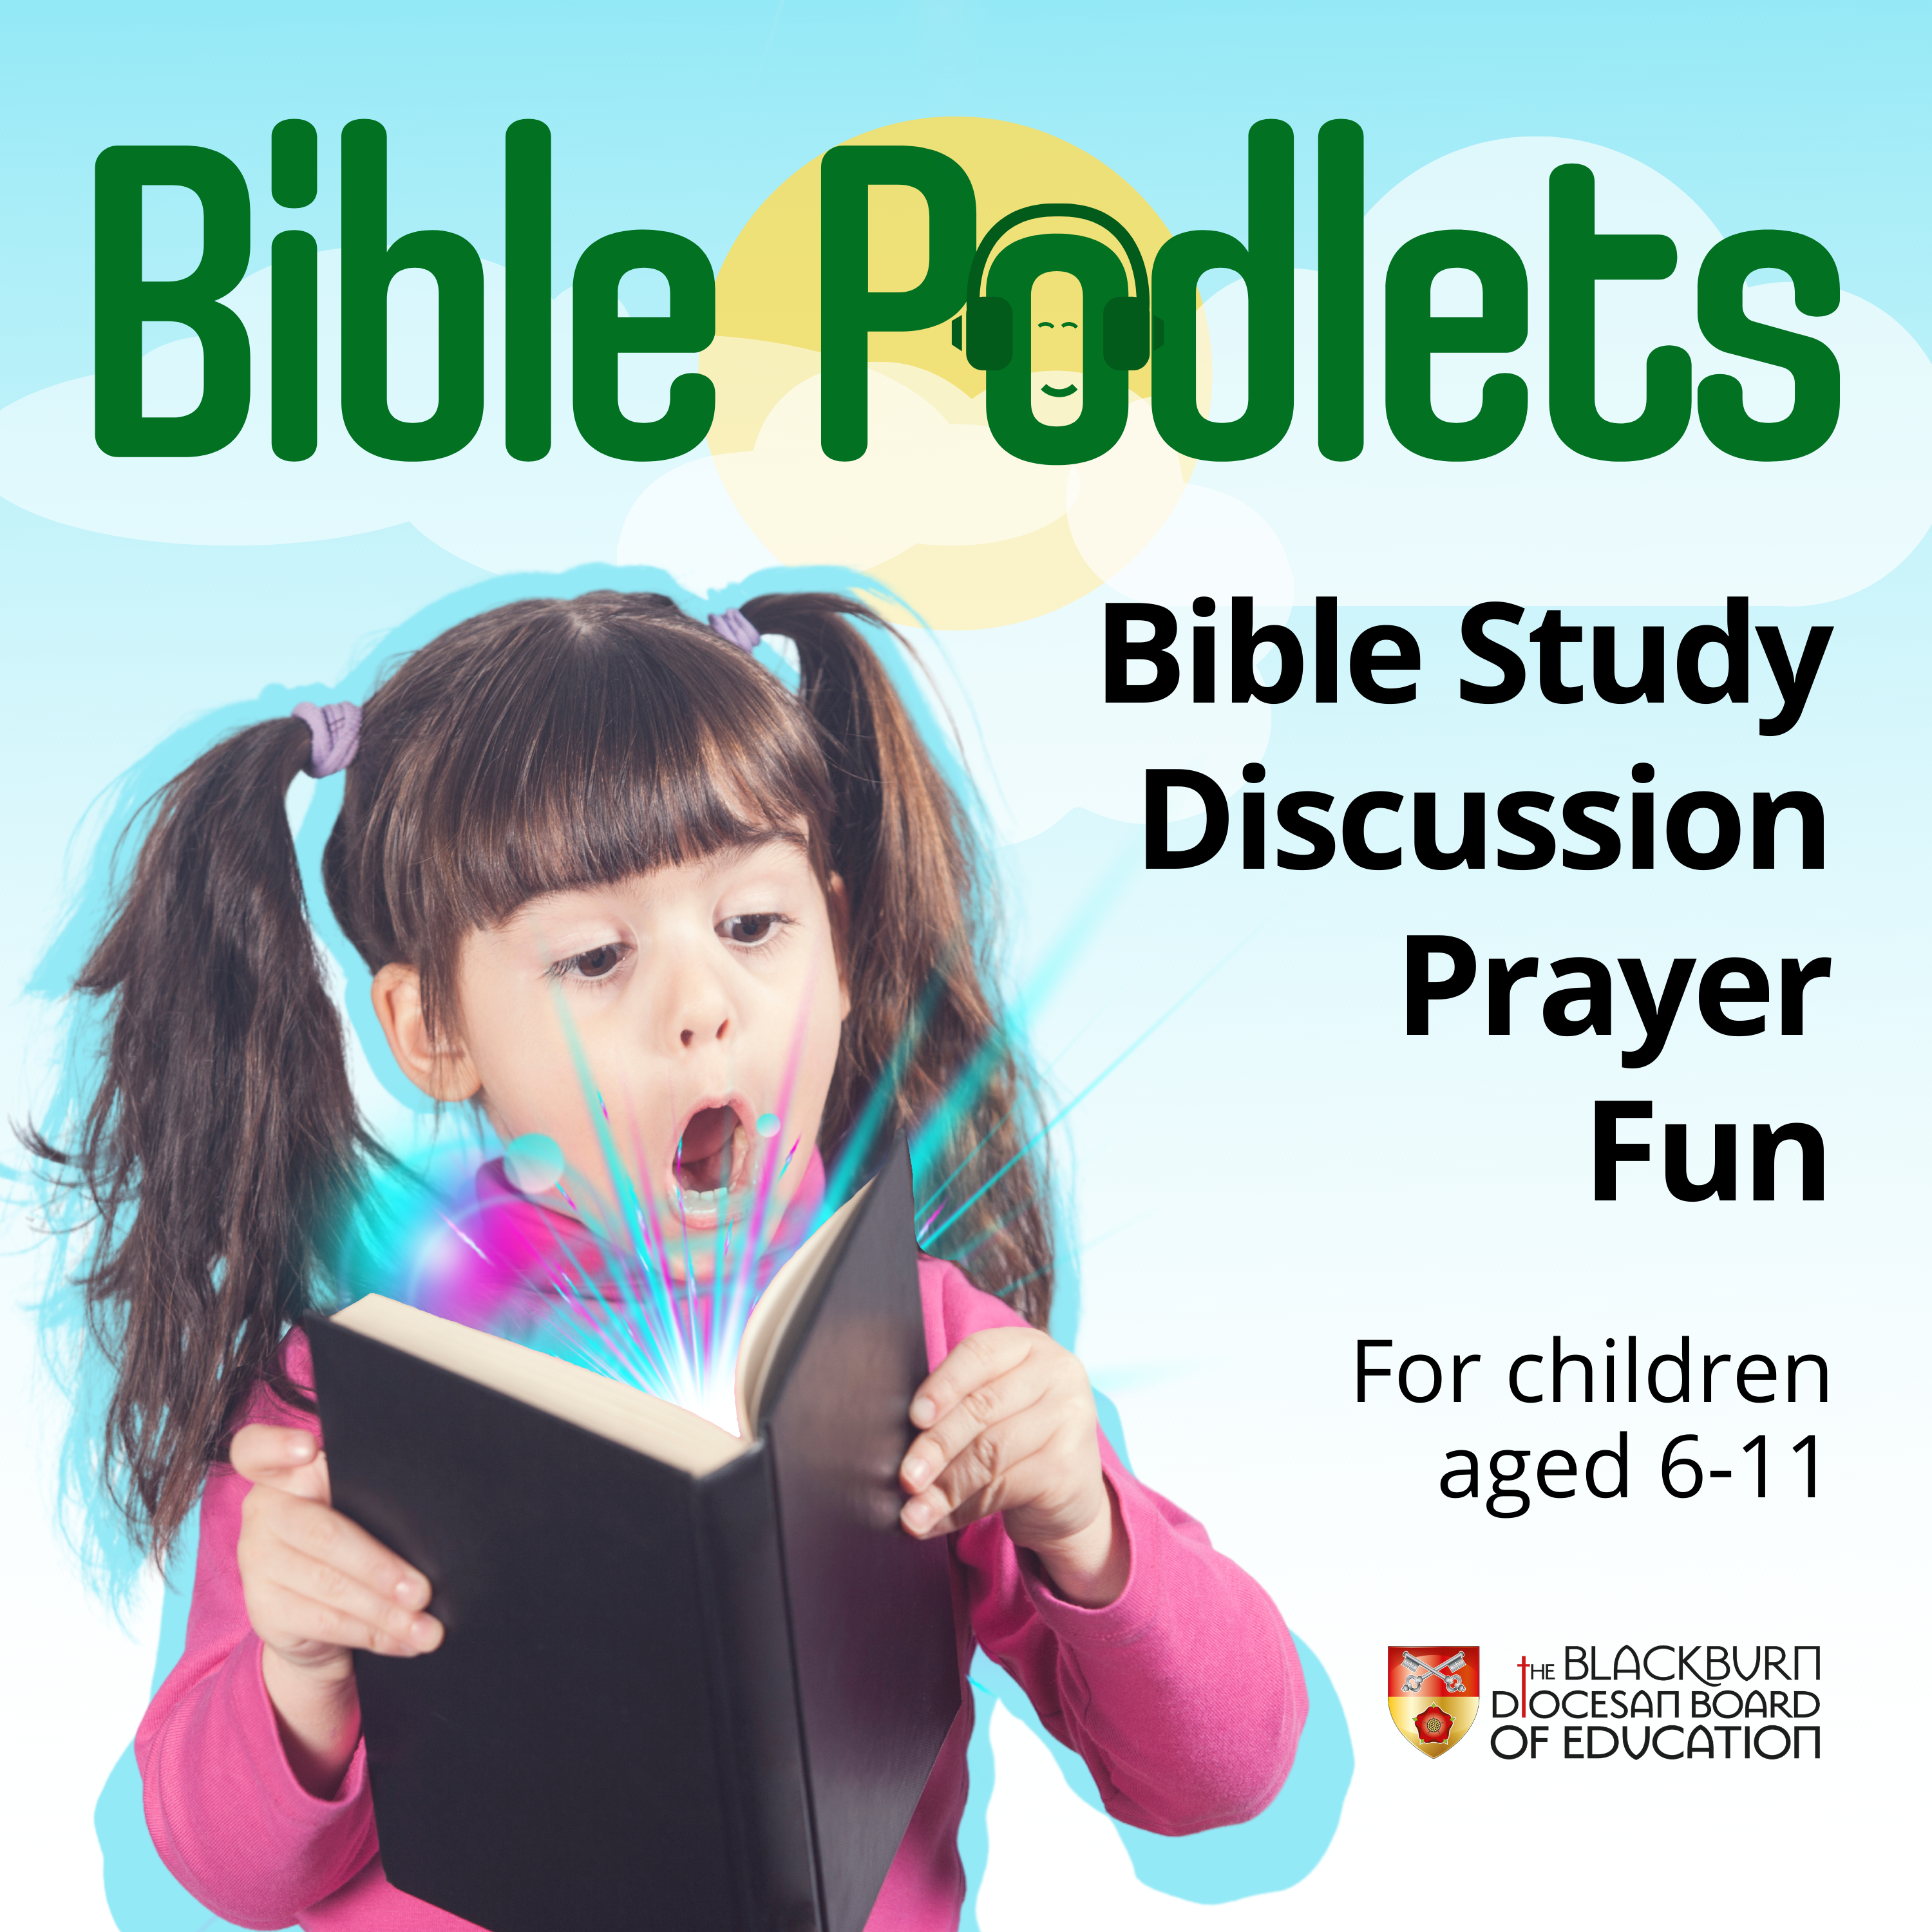 Bible Podlets Series 3 has arrived!